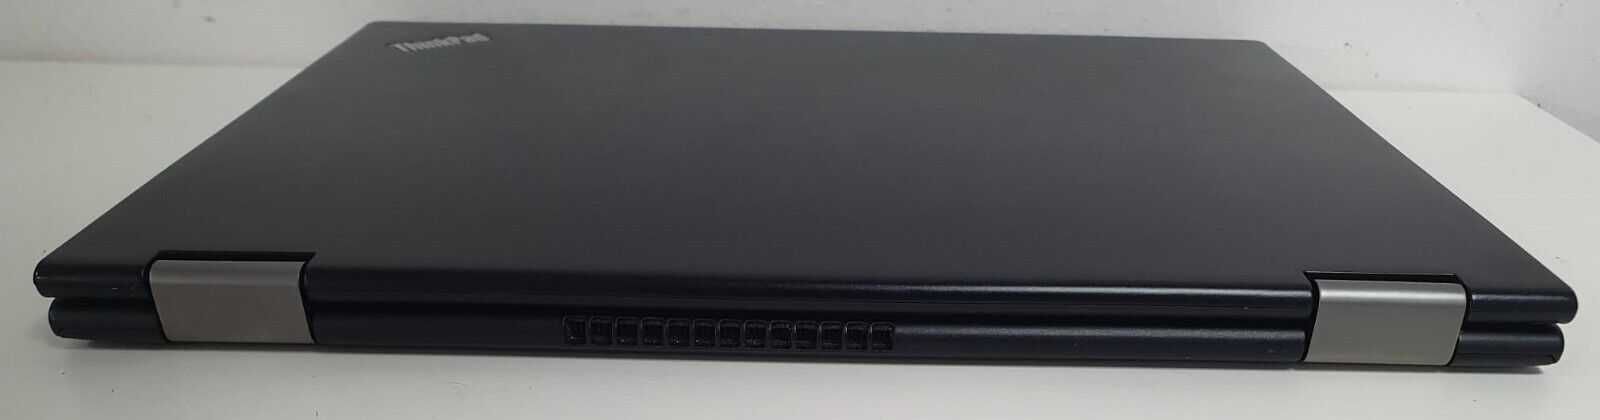 Лаптоп Lenovo YOGA 260 I5-6300U 8GB 256GB 12.5 FHD TOUCHSCREEN